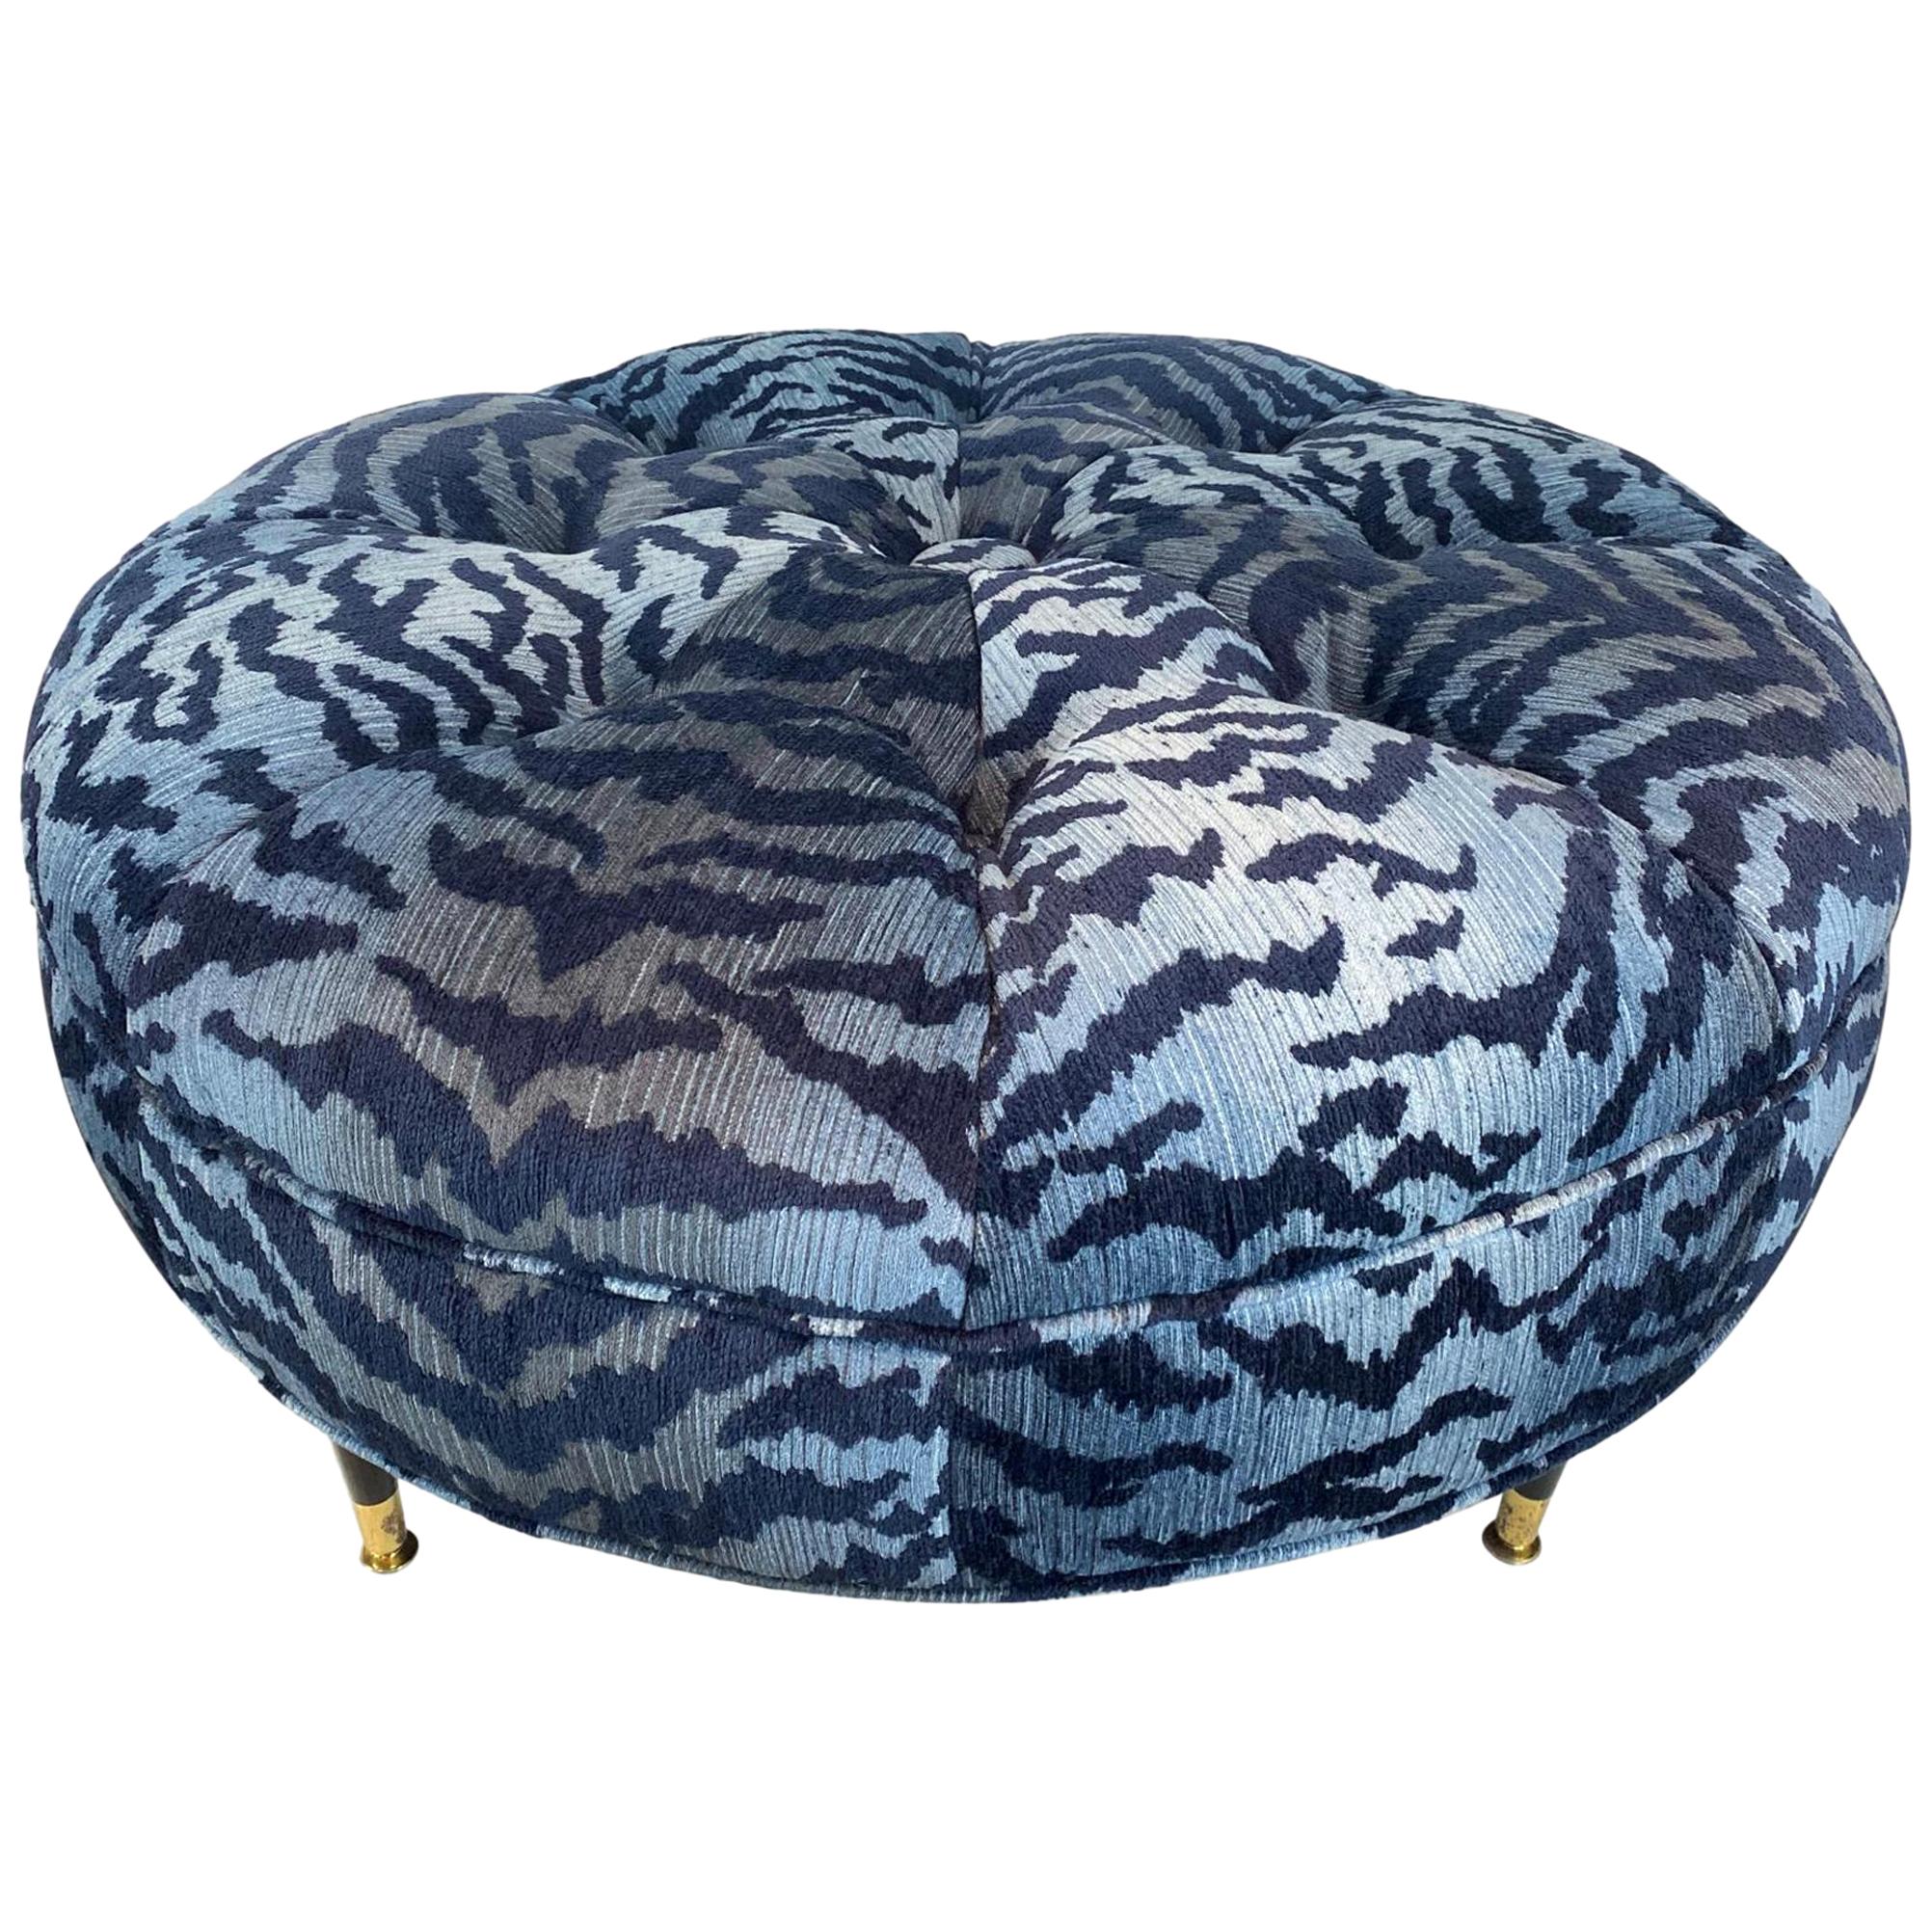 Mid-Century Modern Ottoman, circa 1950s Newly Upholstered in Blue Tiger Velvet